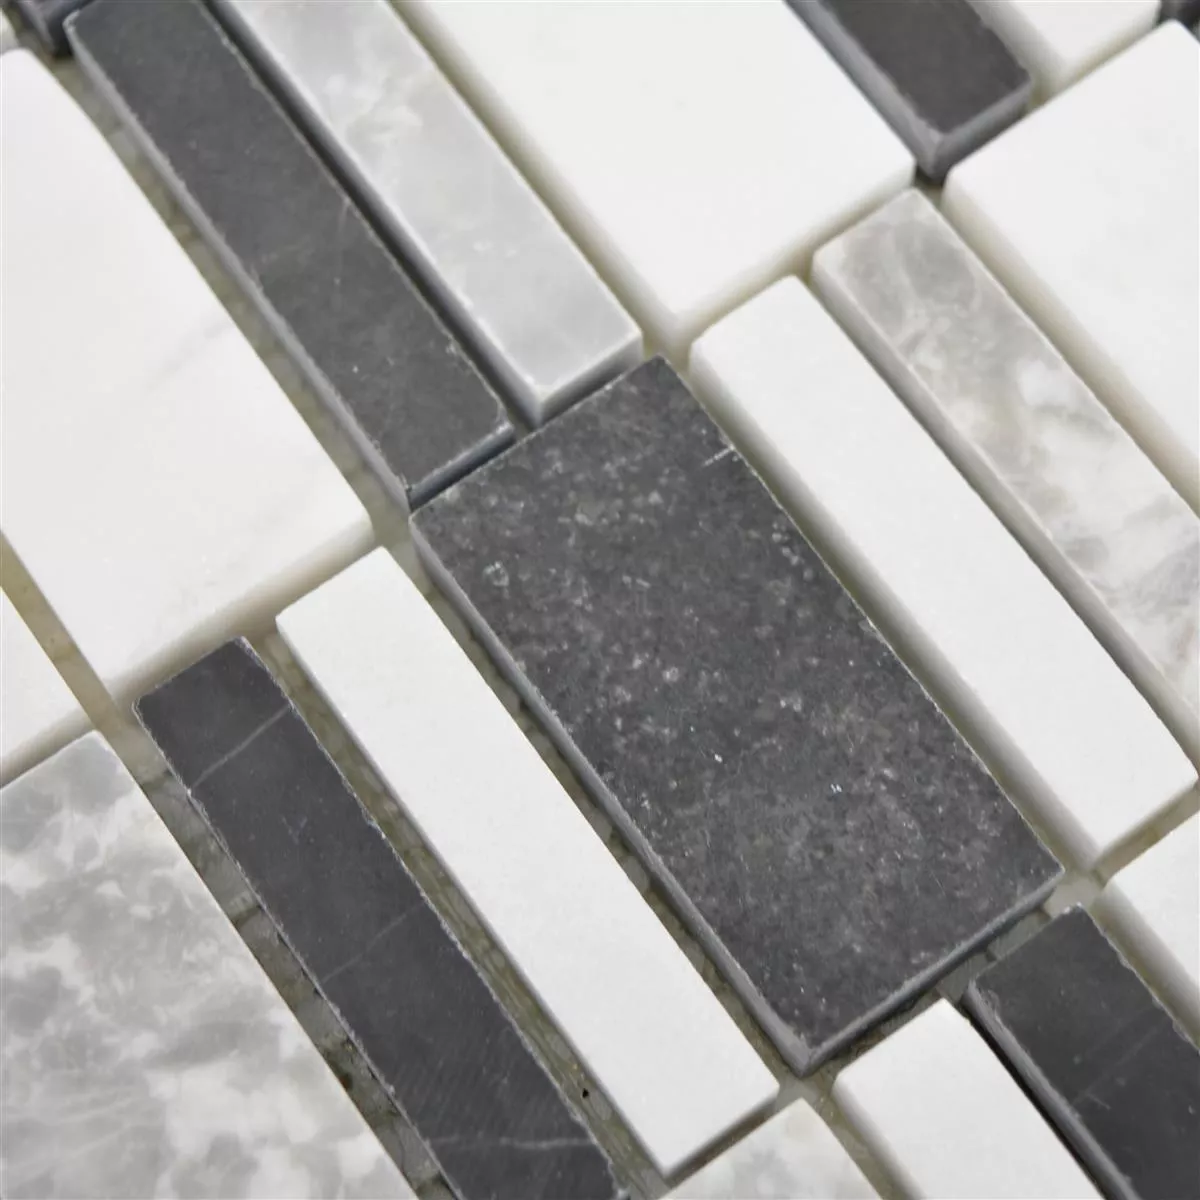 Marble Mosaic Tiles Sunbury Black Grey White